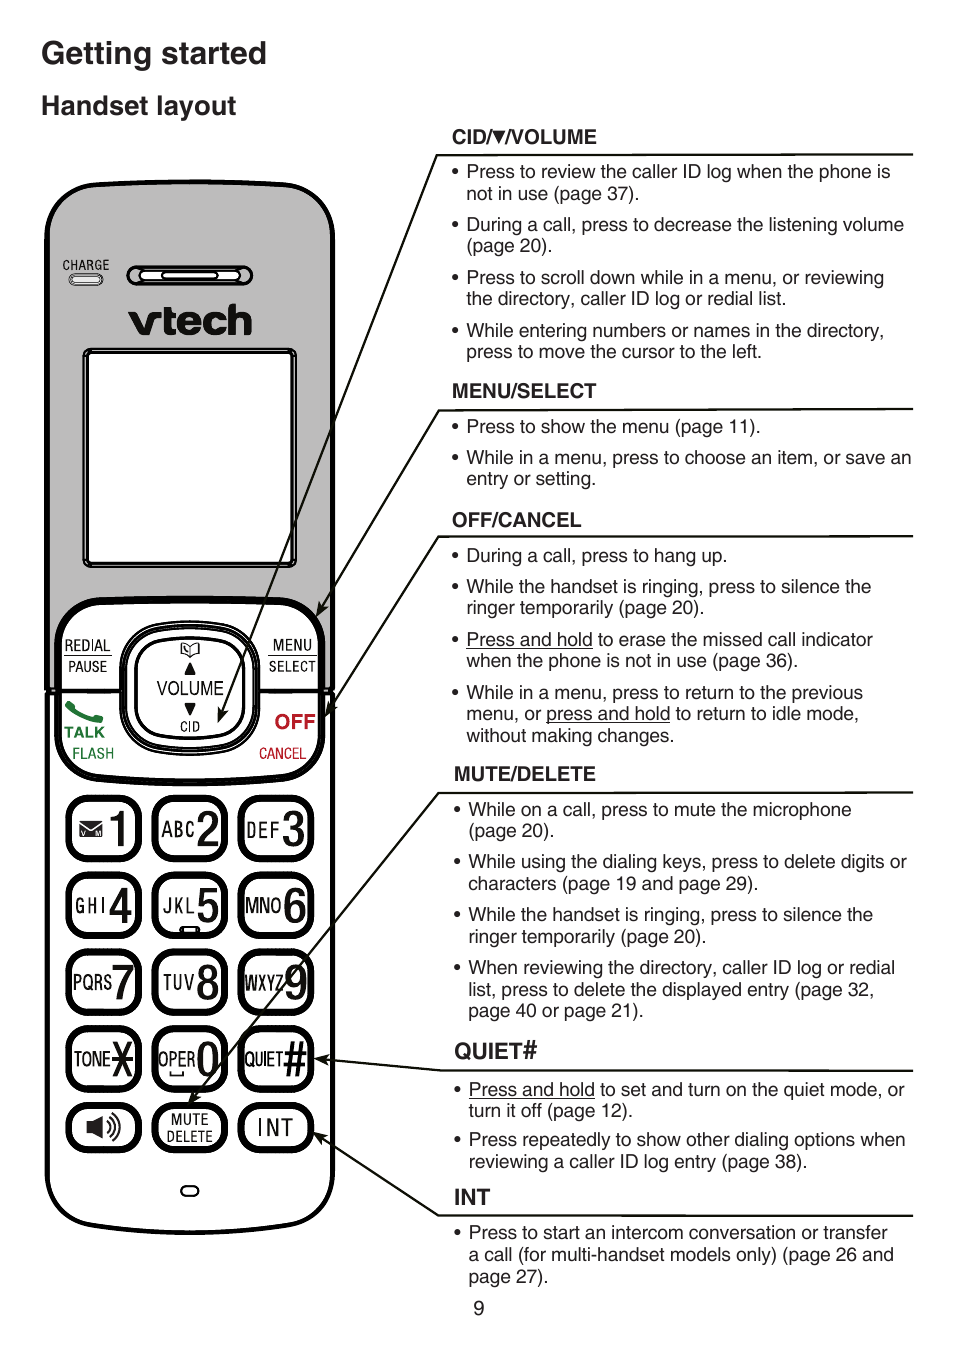 Getting started, Handset layout | VTech CS6519-2 Manual User Manual